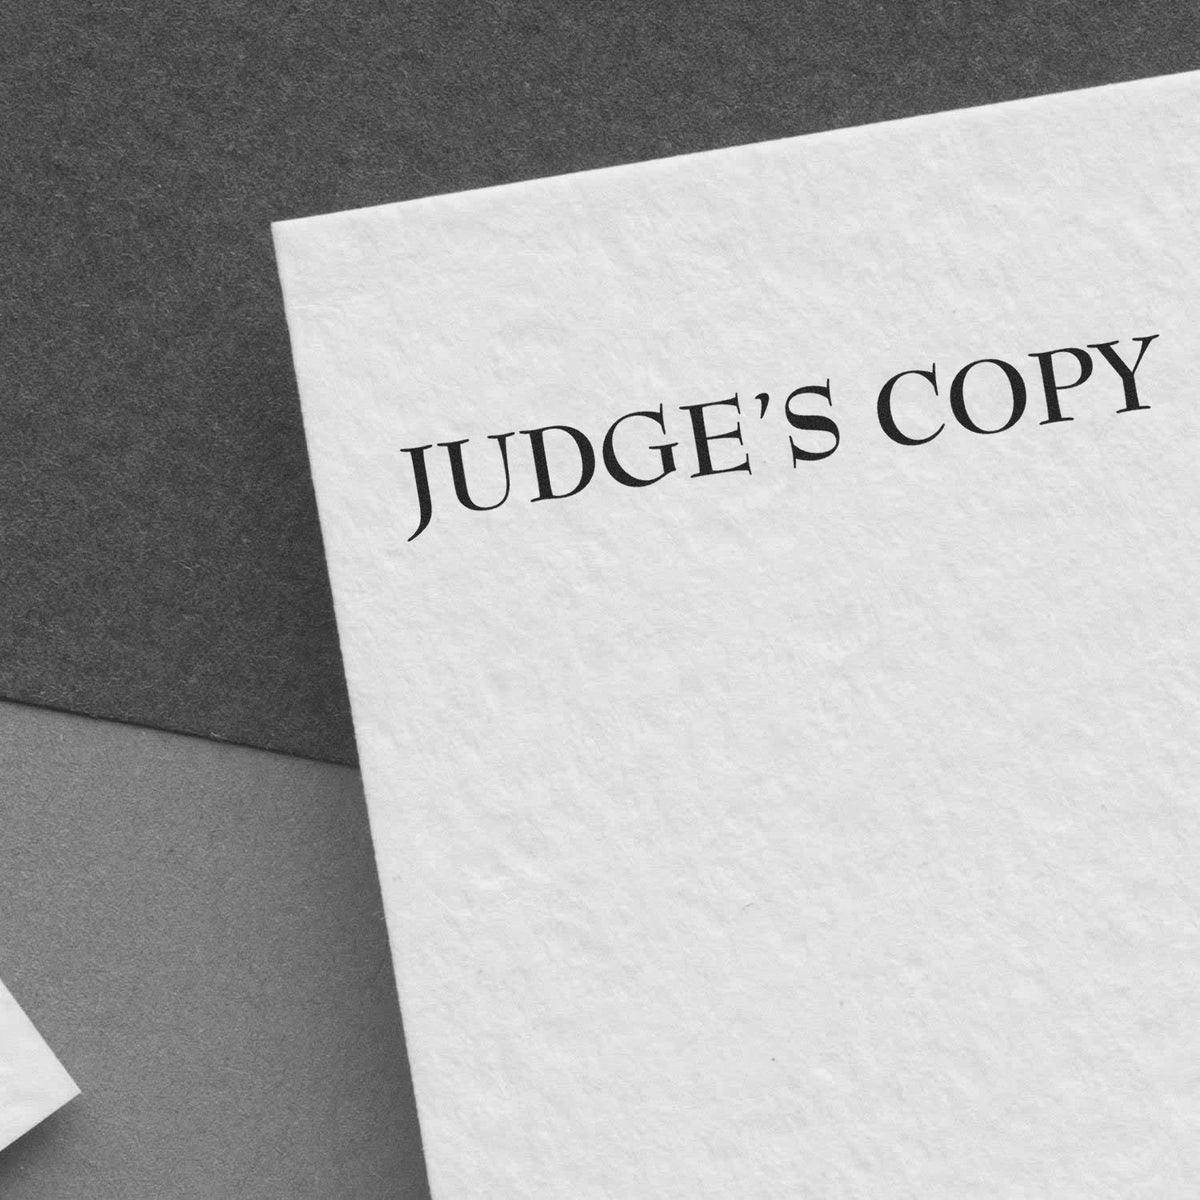 Self Inking Judges Copy Stamp Lifestyle Photo